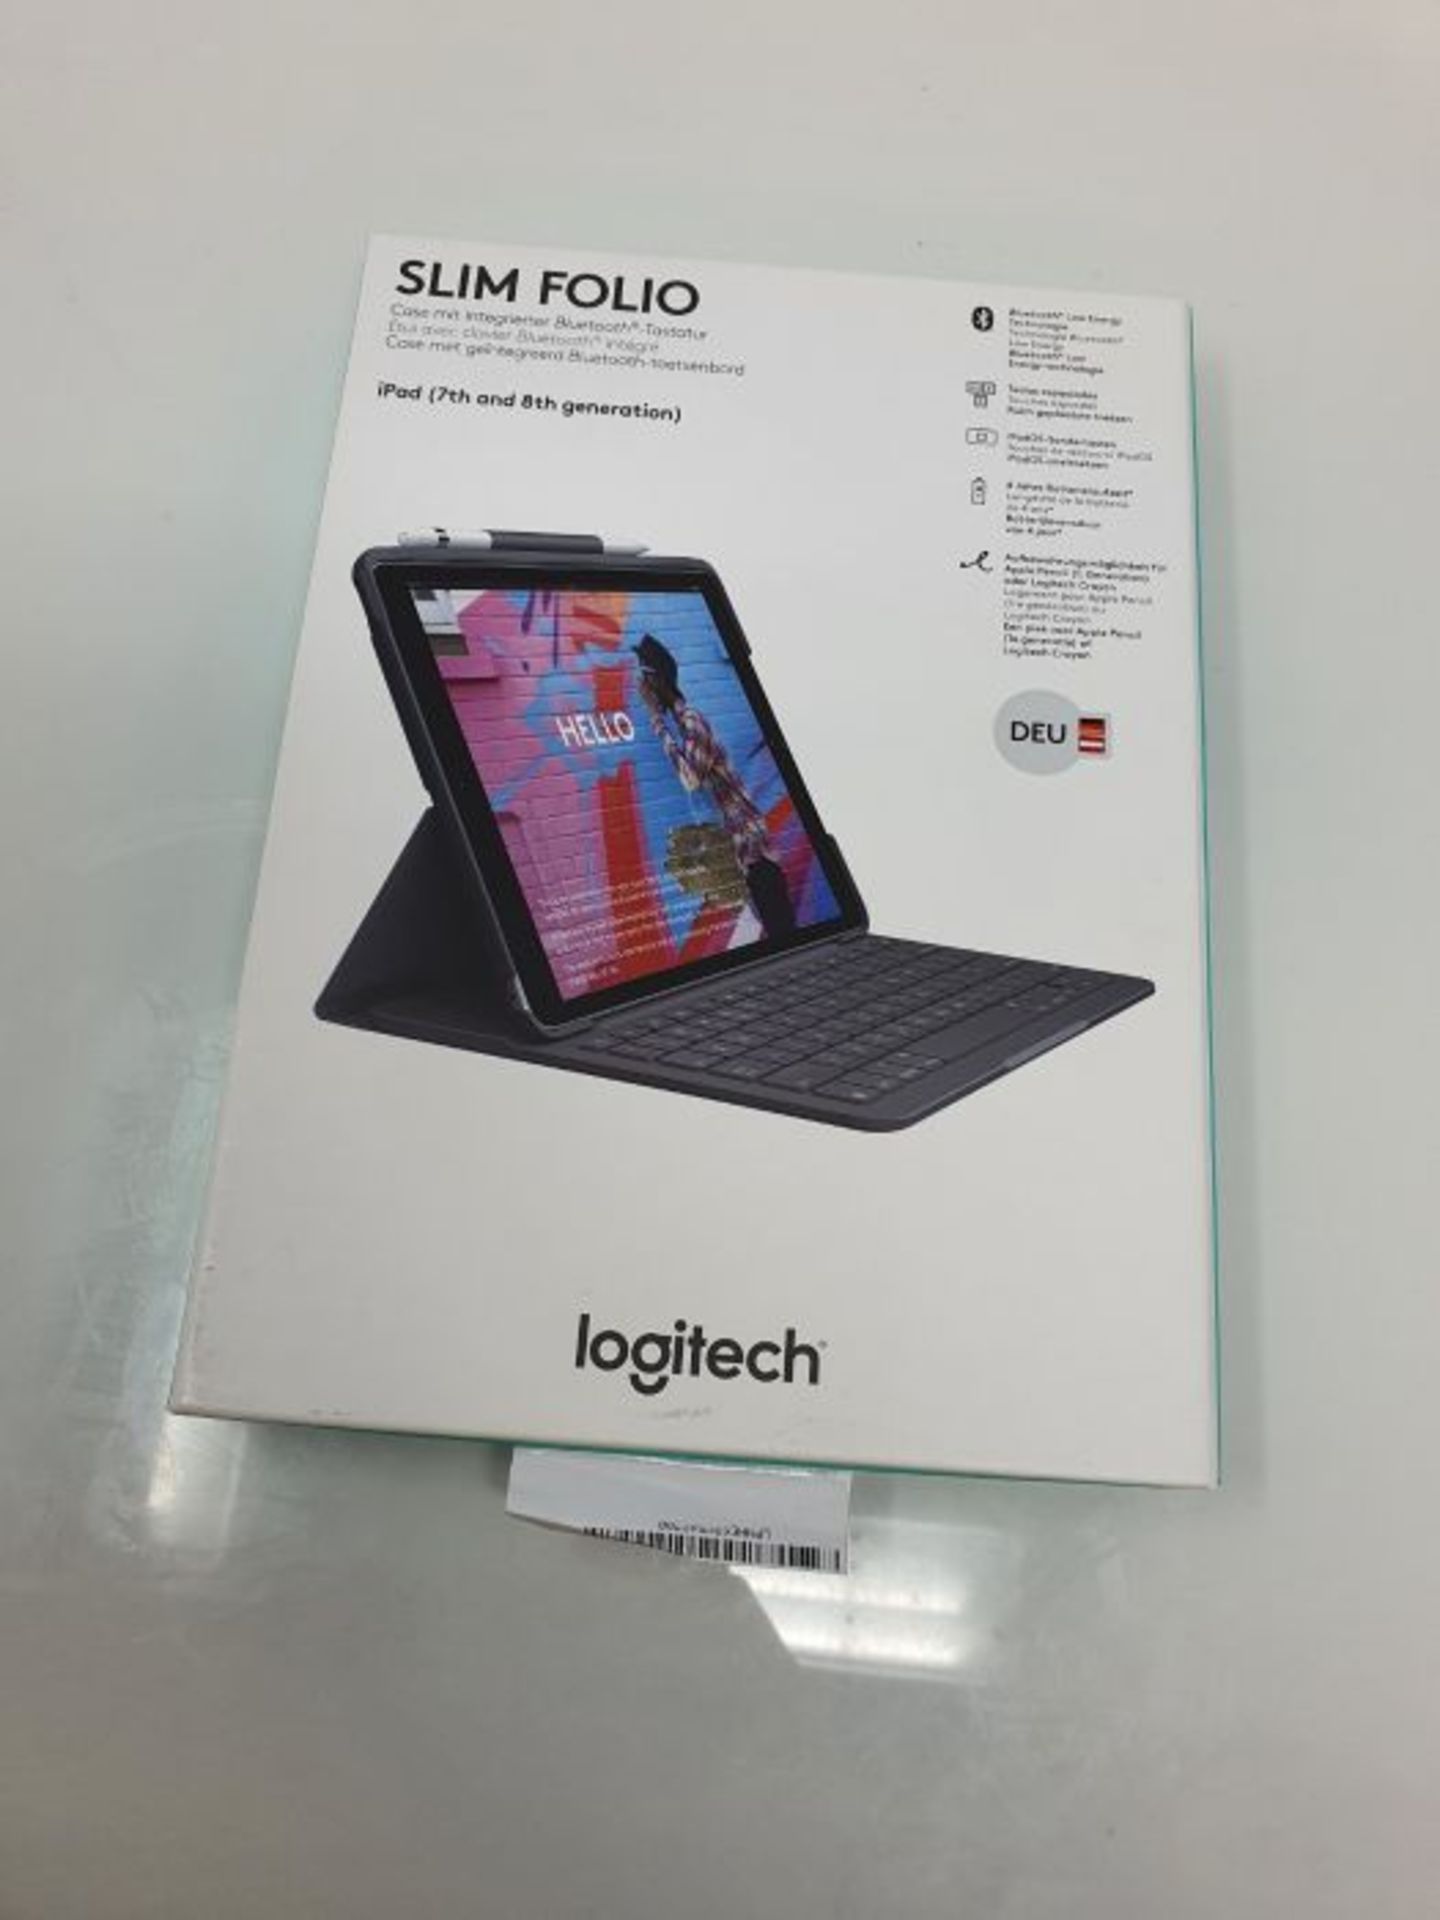 RRP £70.00 Logitech SLIM FOLIO iPad Keyboard Case 10.2 Inch, QWERTZ German Layout - Graphite Blac - Image 2 of 3